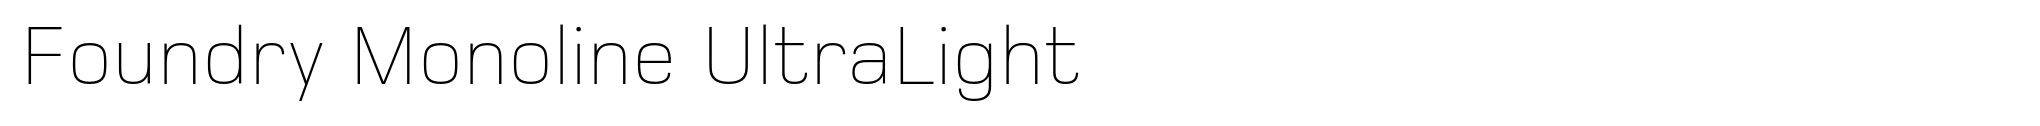 Foundry Monoline UltraLight image